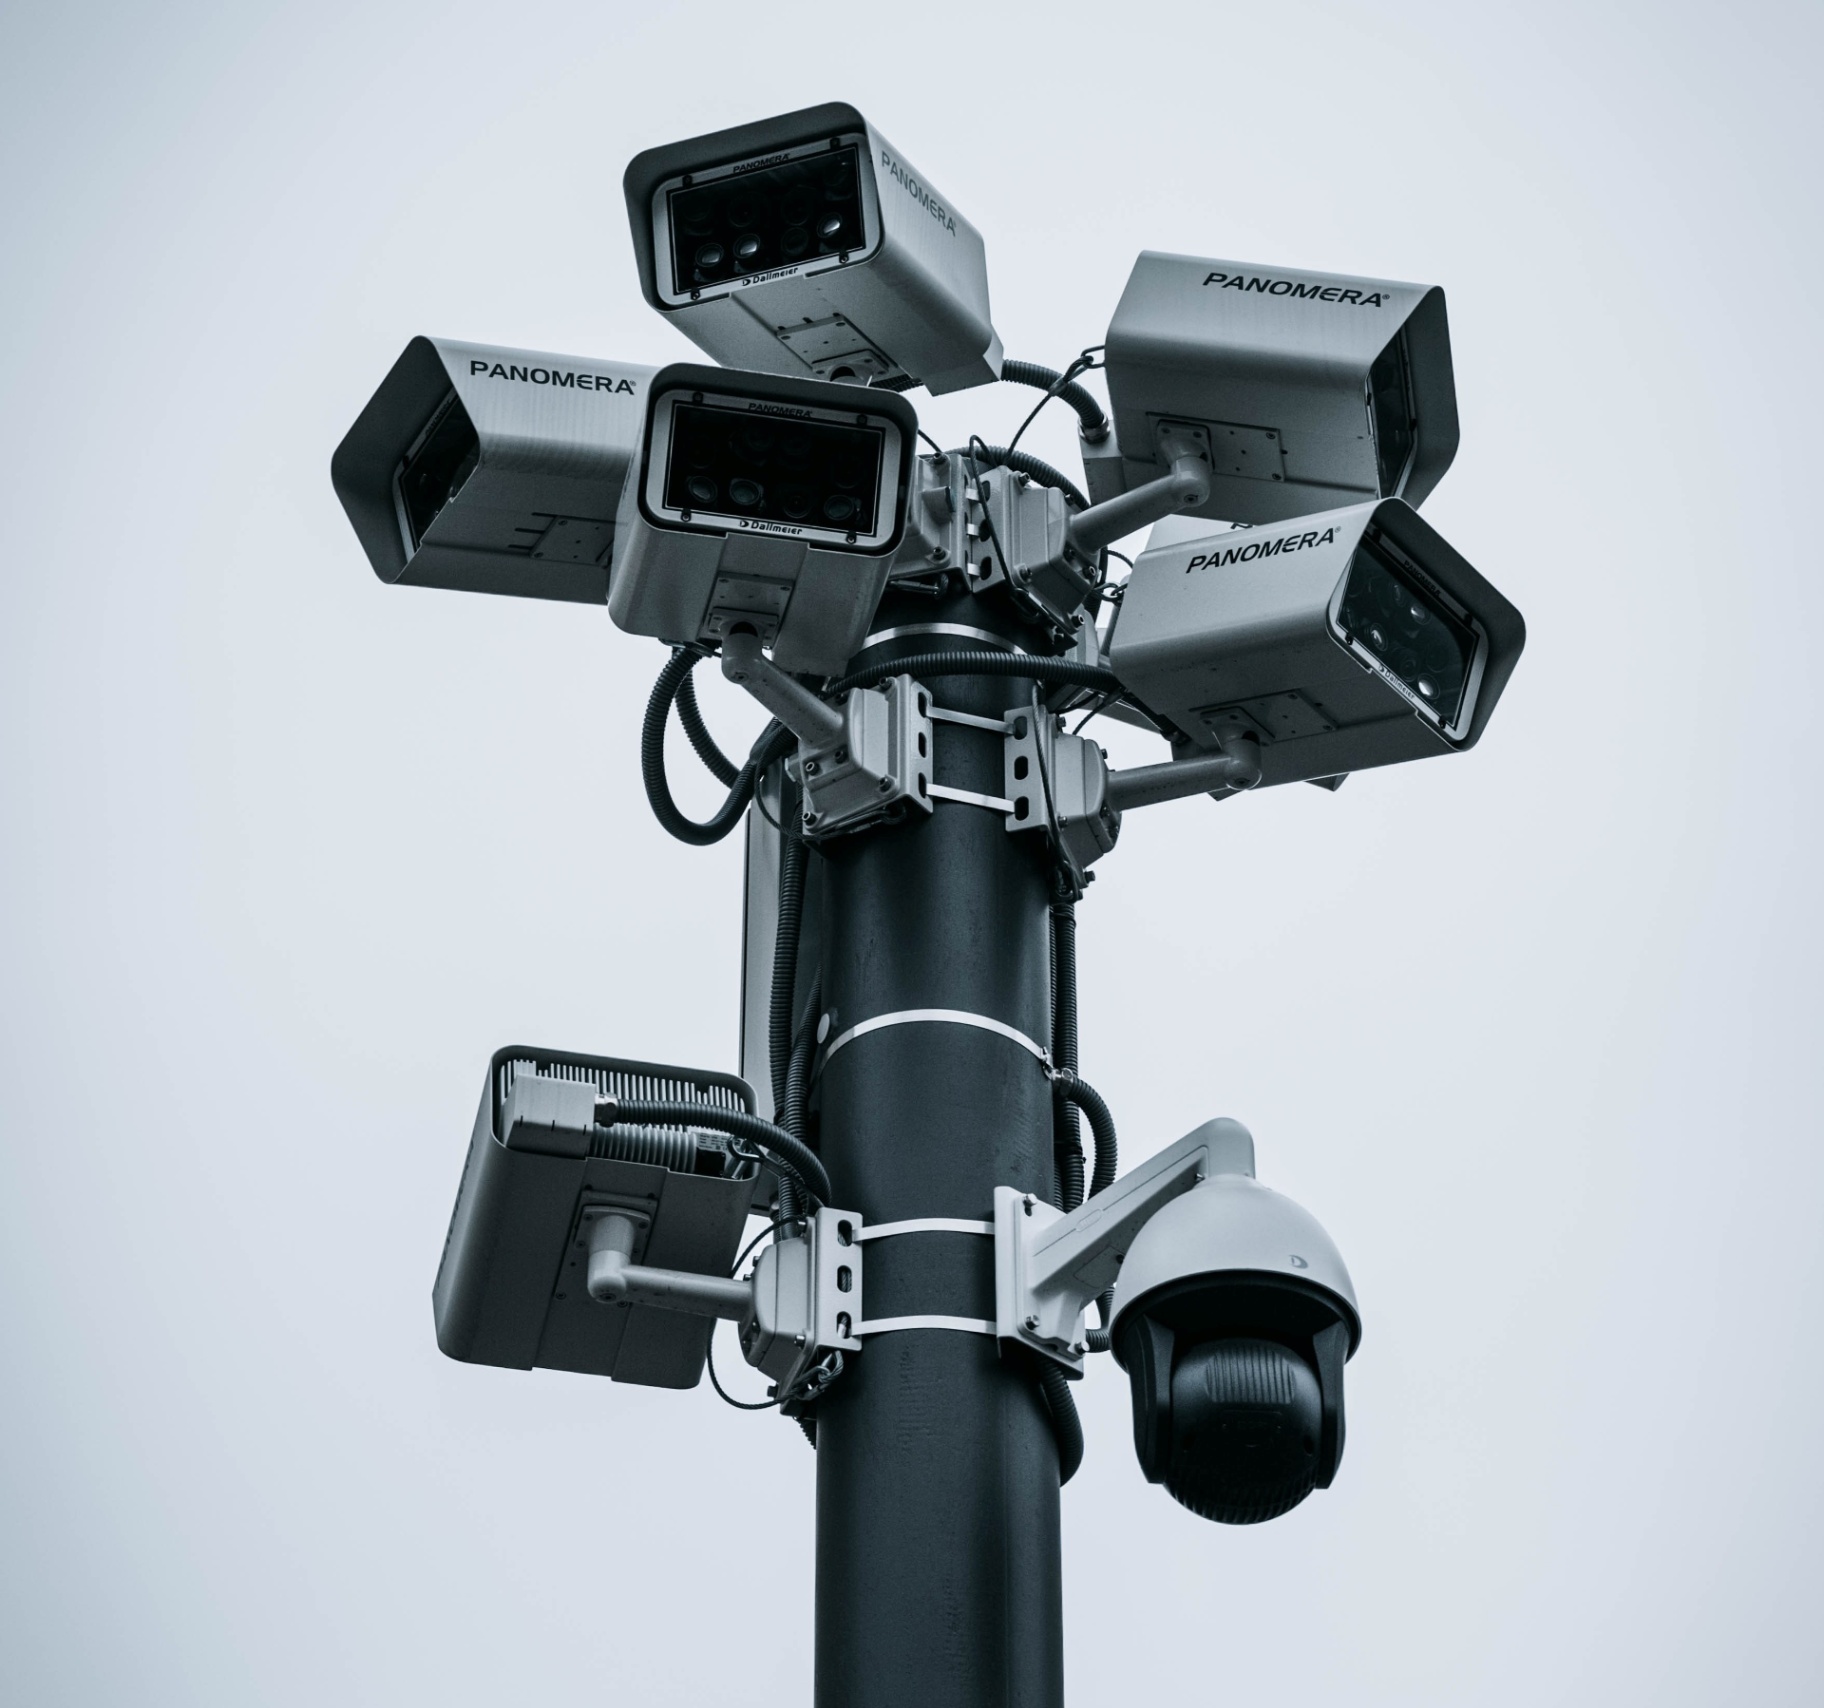 Surveillance cameras on pole